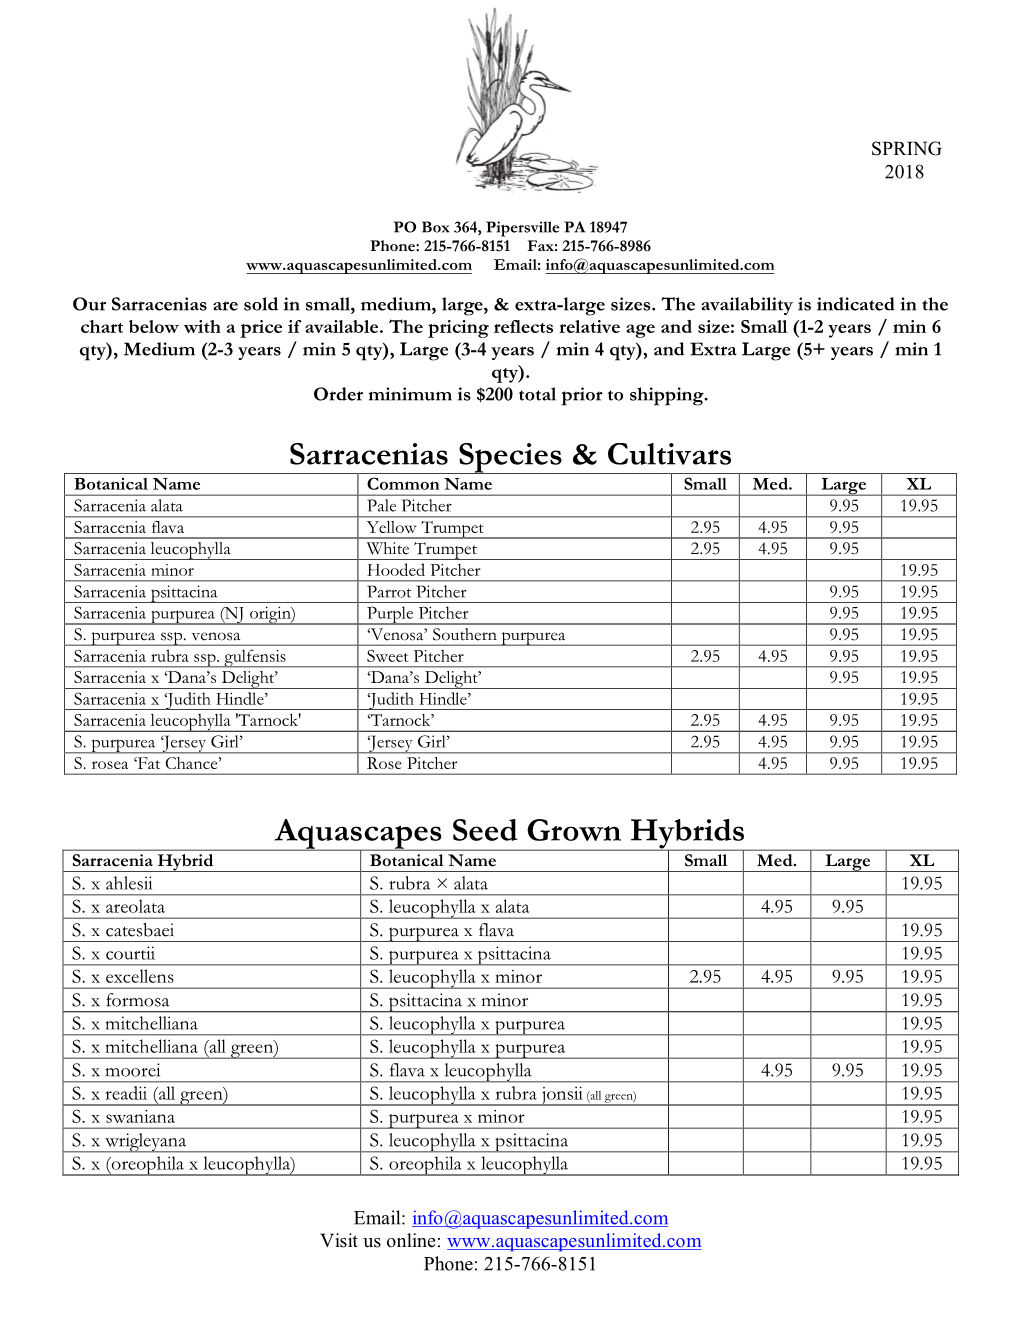 Sarracenias Species & Cultivars Aquascapes Seed Grown Hybrids